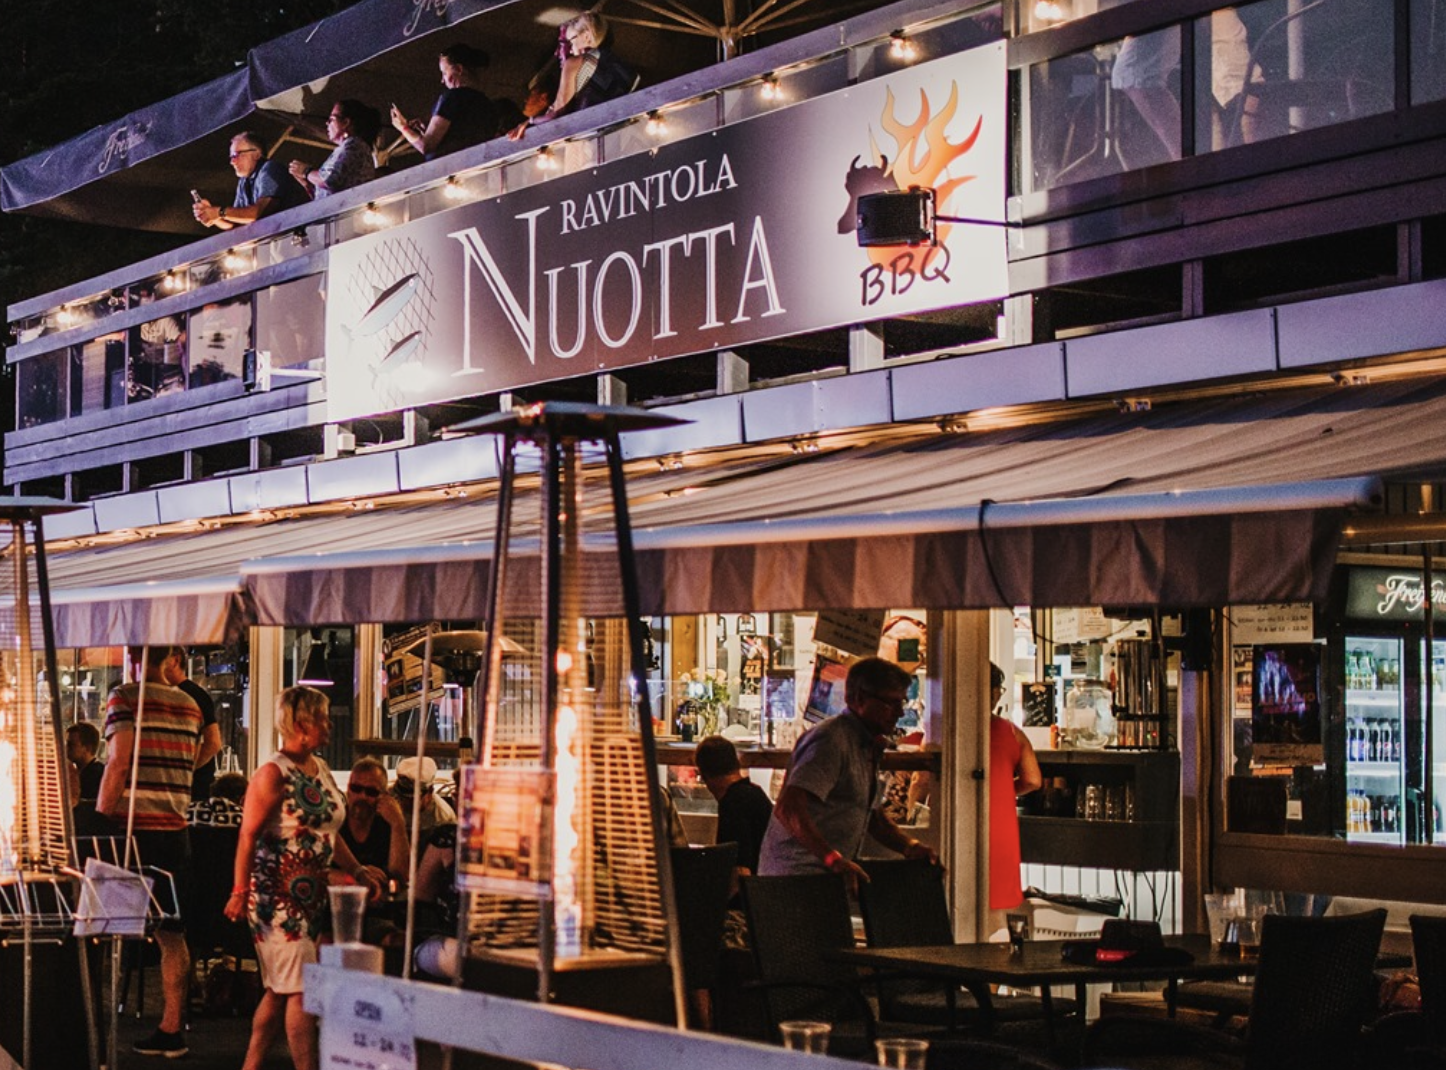 Restaurant Nuotta